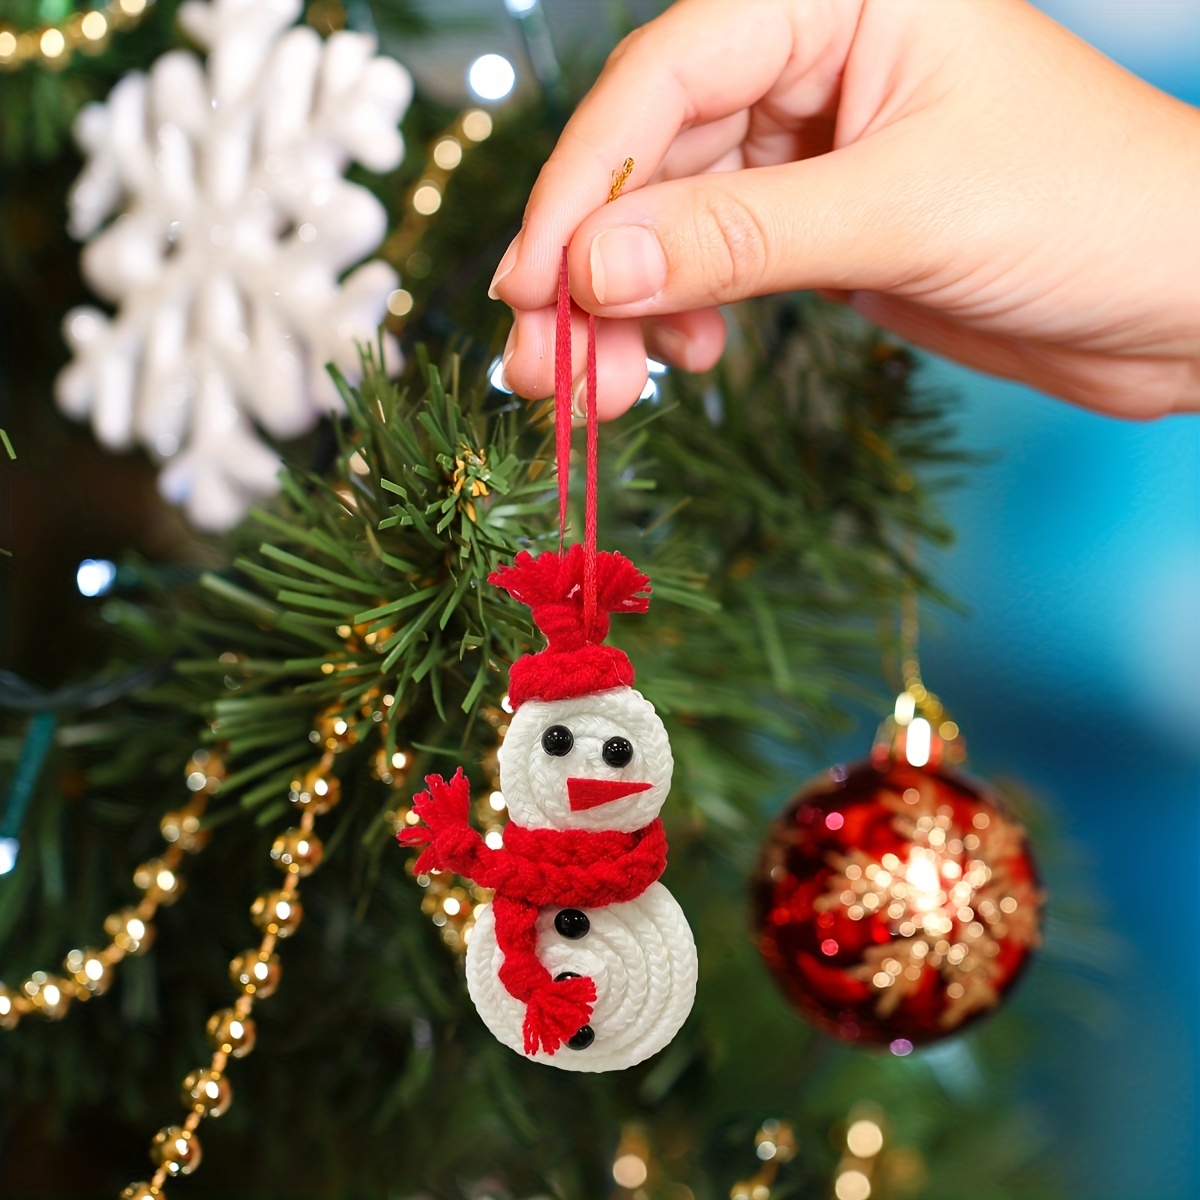 Ozmmyan 5 Year Old Girl Birthday Gift Ideas 1pc Christmas Toys Glowing Llittle Snowman Christmas Tree Pendant Ornaments Halloween Decorations, Kids